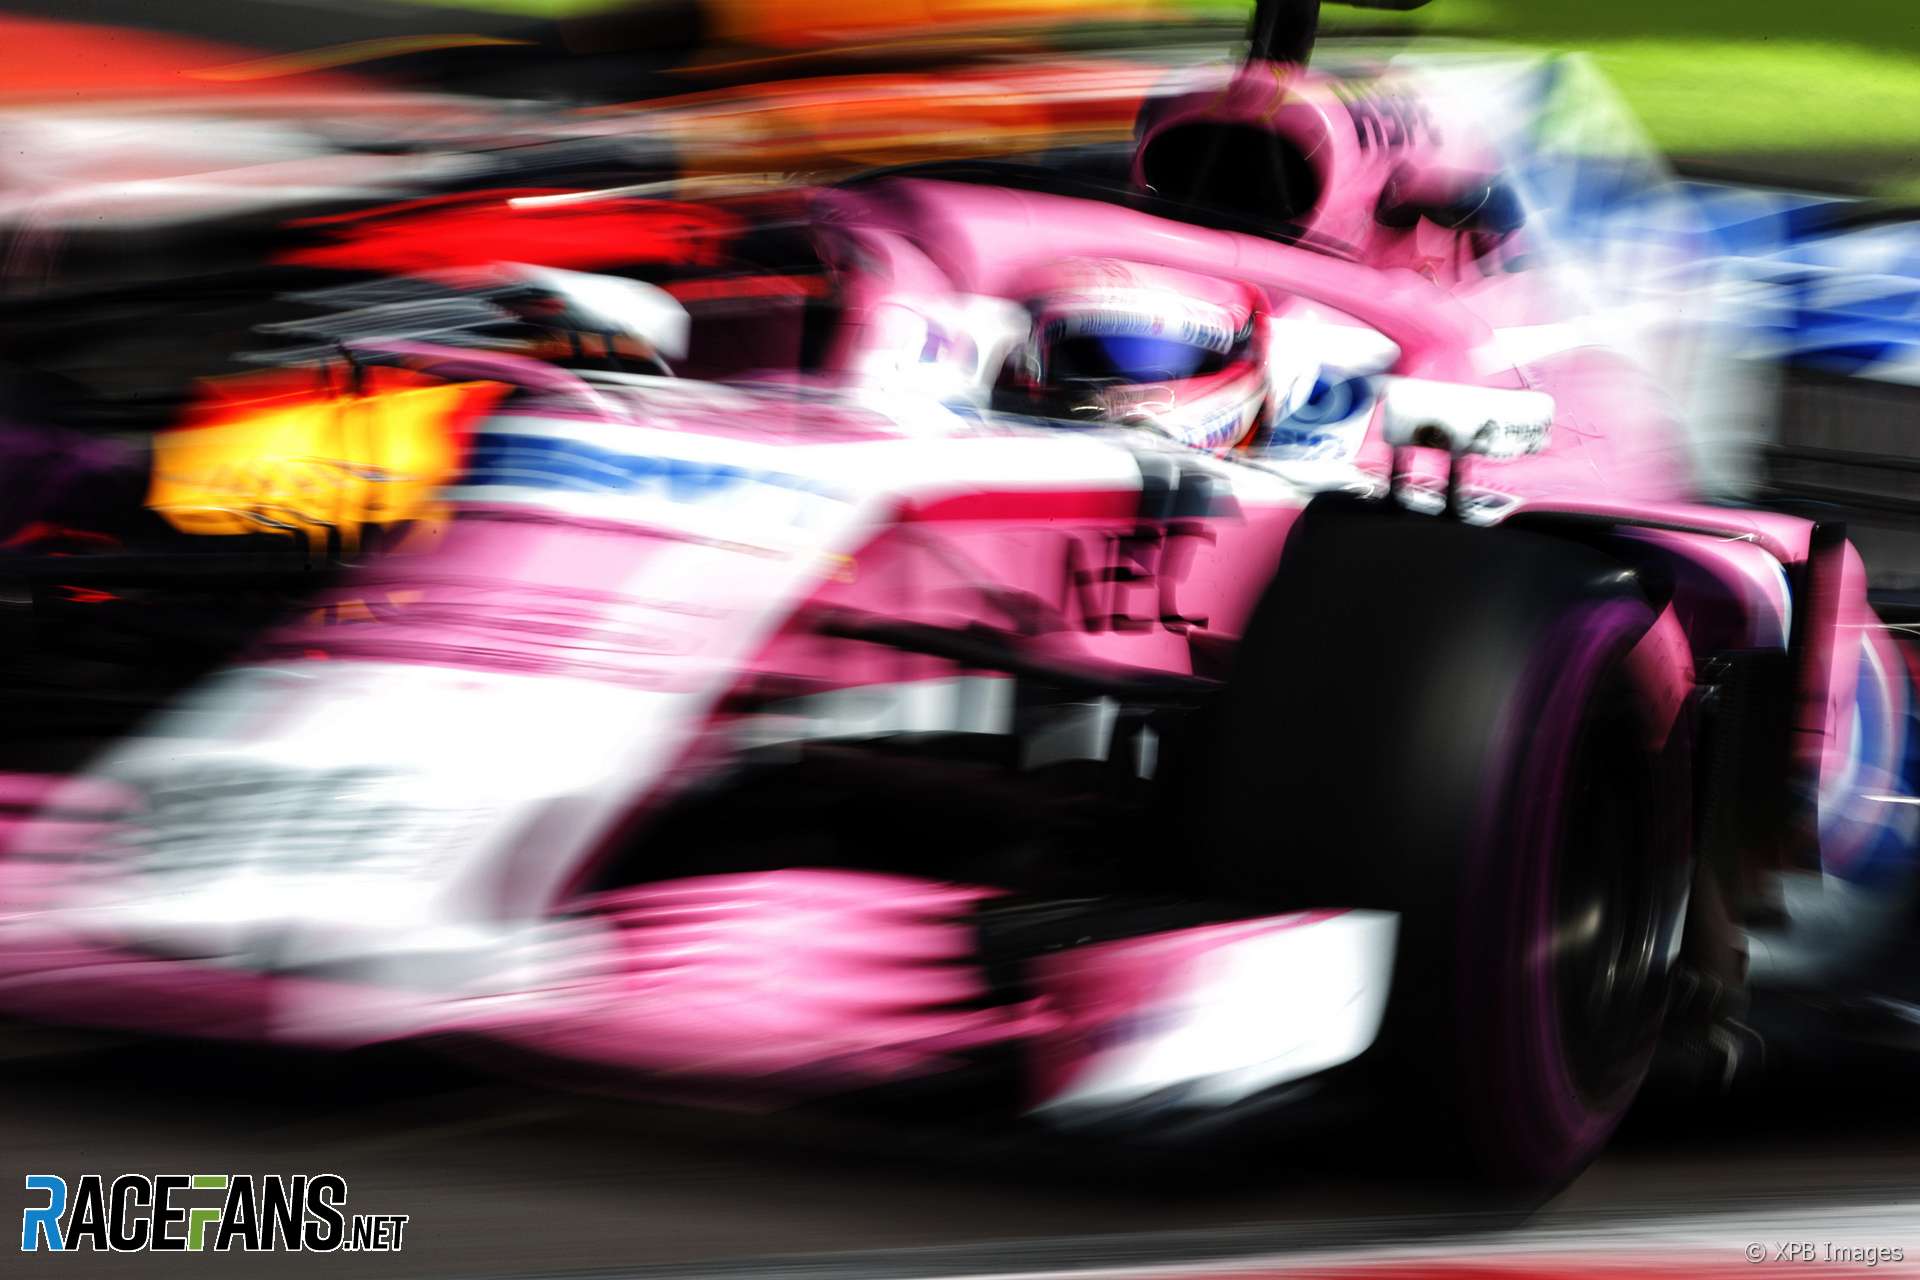 Sergio Perez, Force India, Autodromo Hermanos Rodriguez, 2018